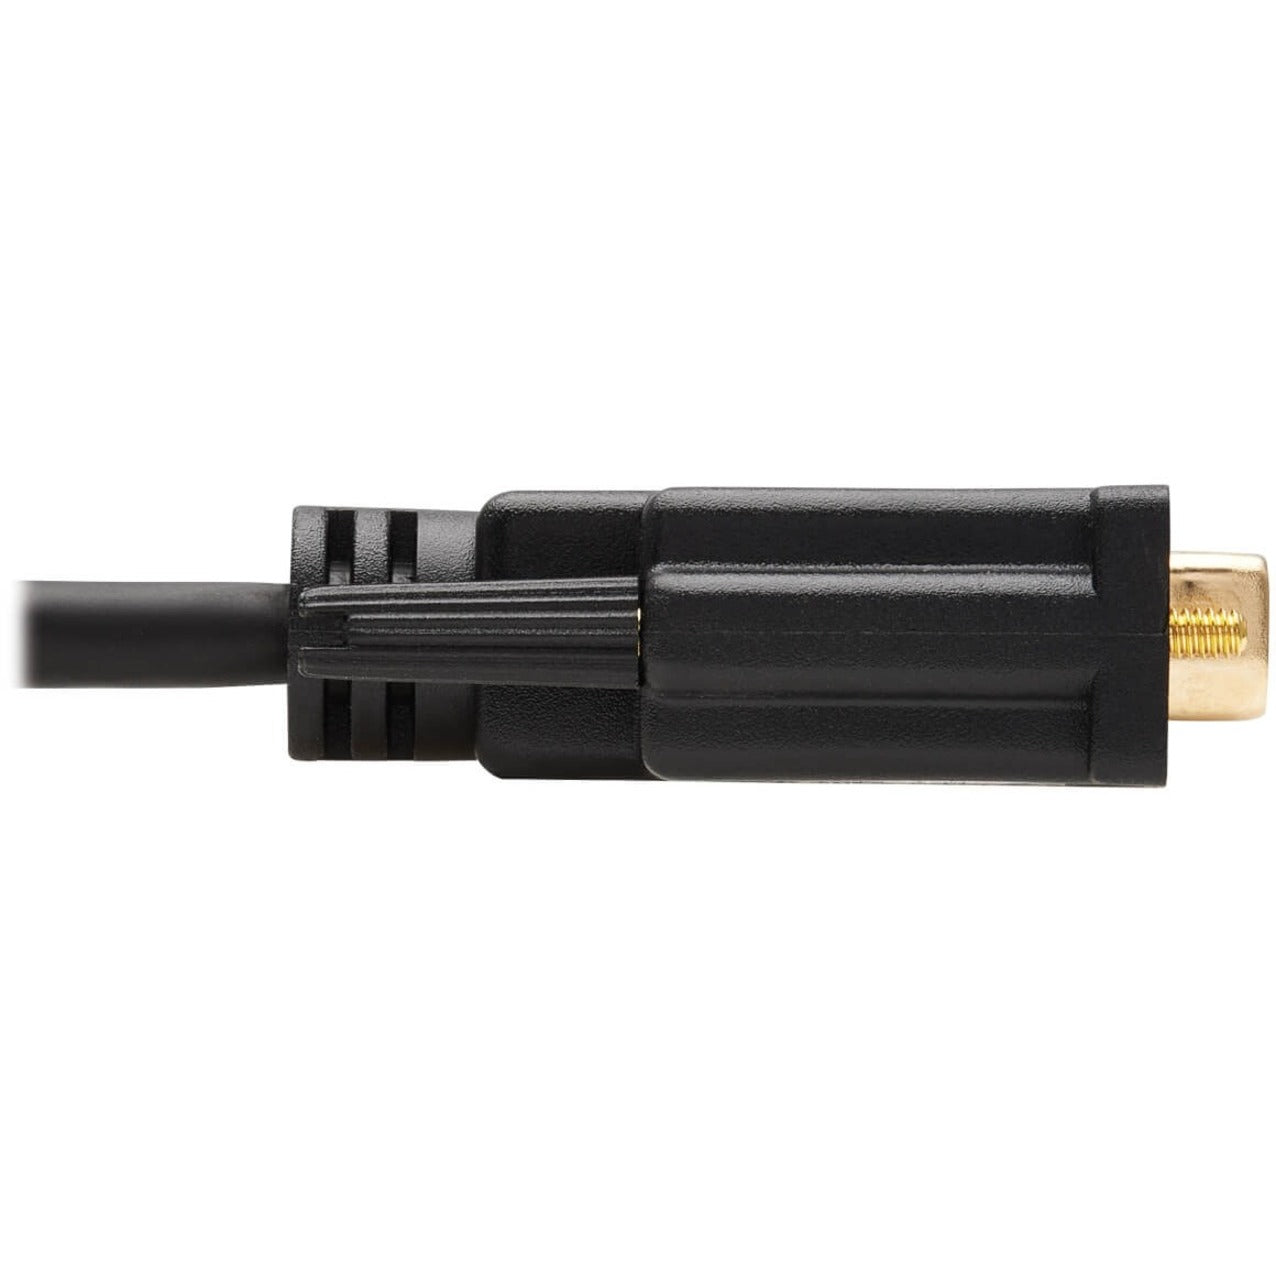 Tripp Lite: トリップライト P566-010 Gold Digital Video Cable: P566-010 ゴールドデジタルビデオケーブル 10 ft HDMI to DVI Male: 10 フィート HDMI から DVI メス Copper Conductor: 銅導体